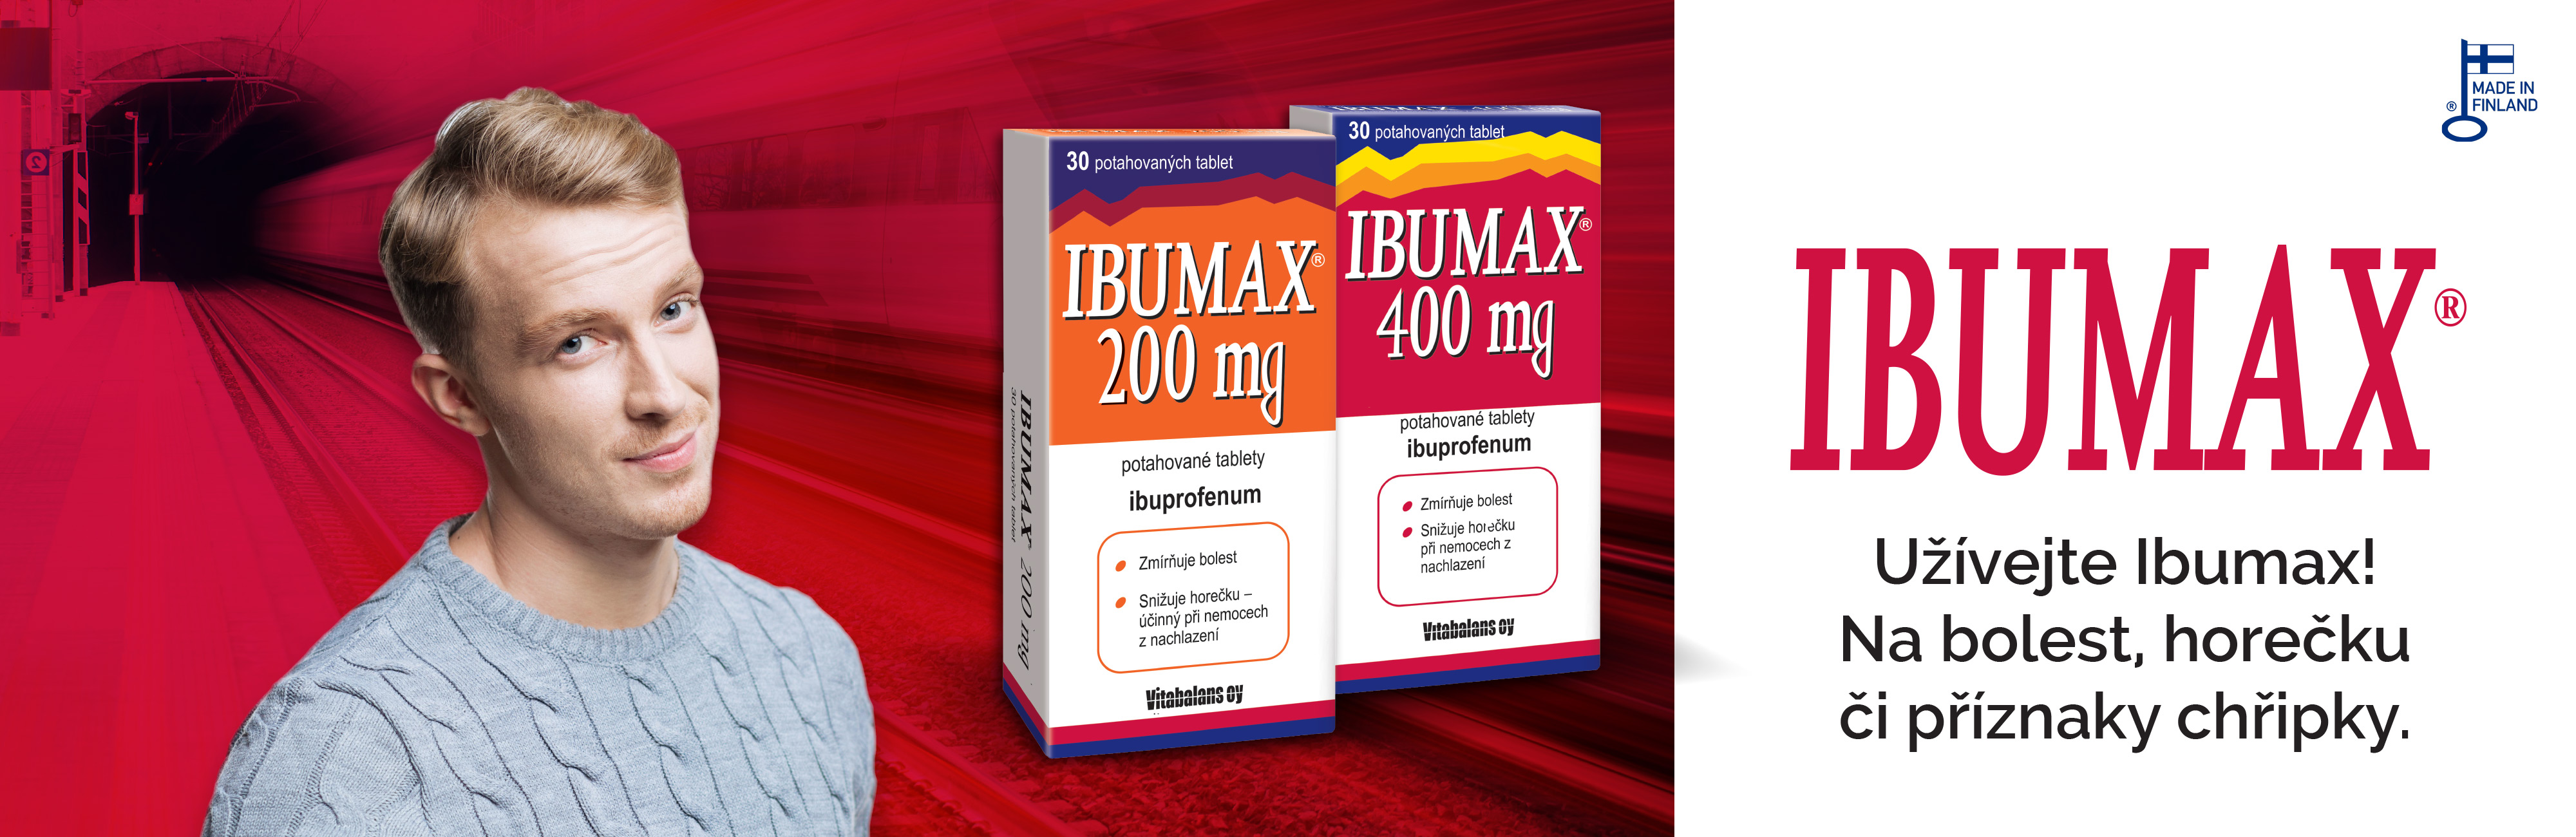 Obrázek IBUMAX 400 mg 100 potahovaných tablet